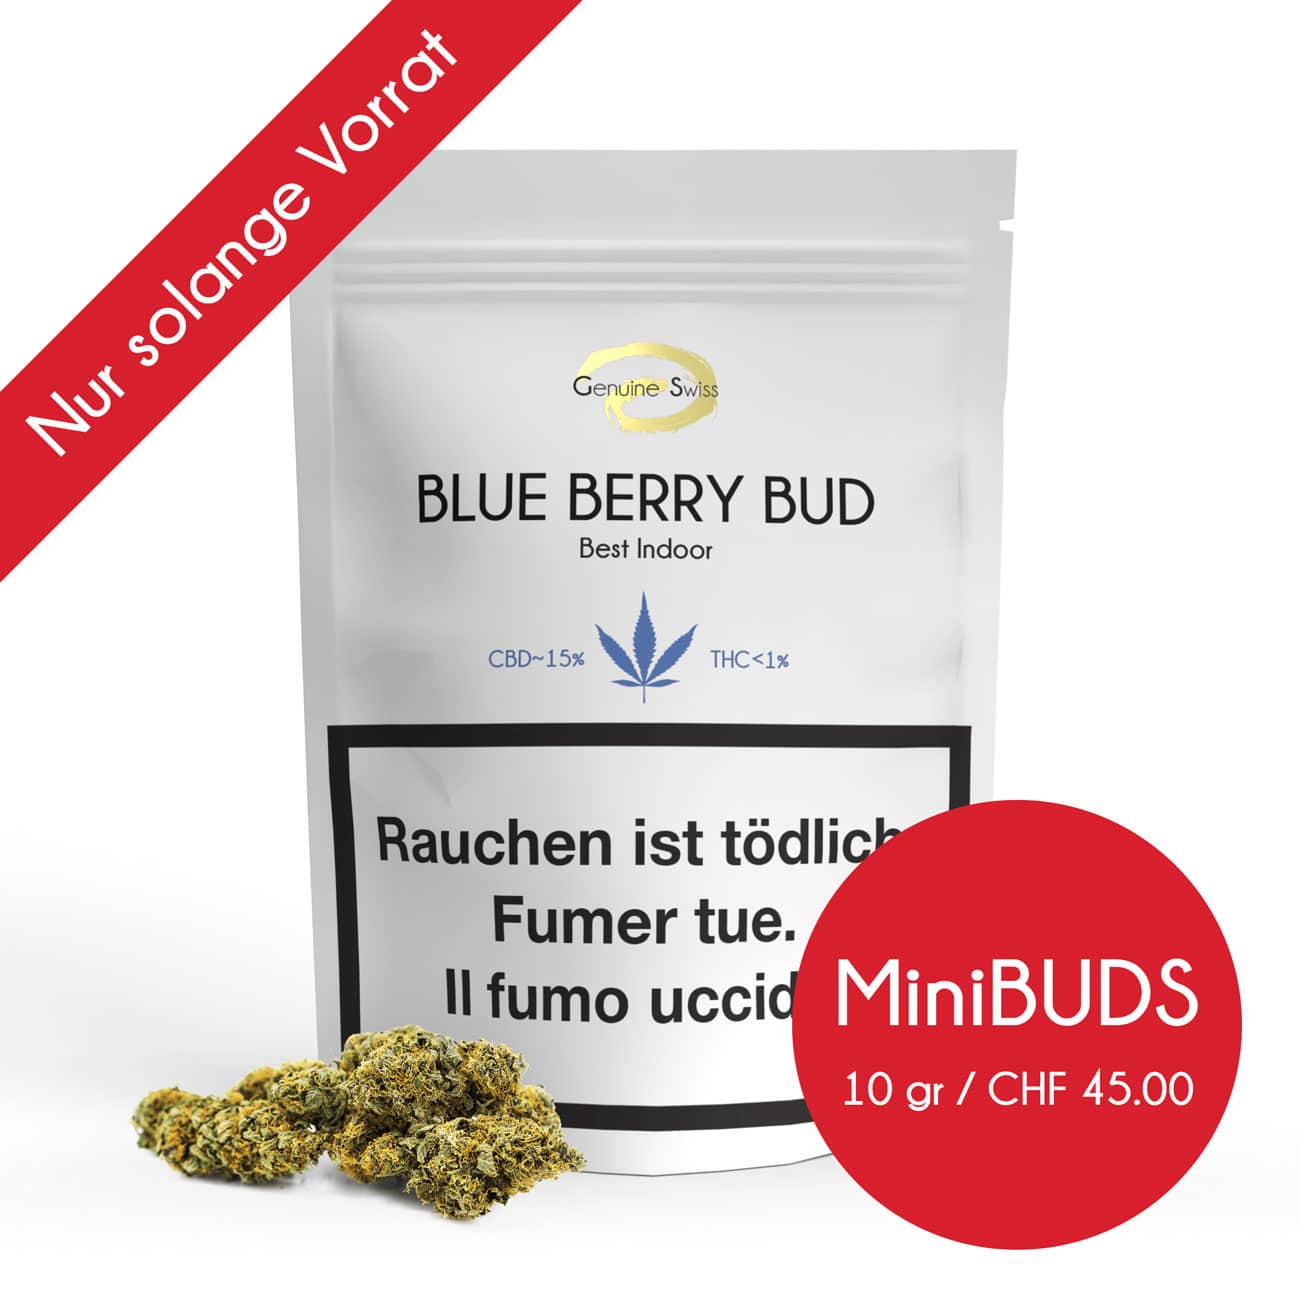 Genuine Swiss Blue Berry Minibuds, Petites Fleurs CBD